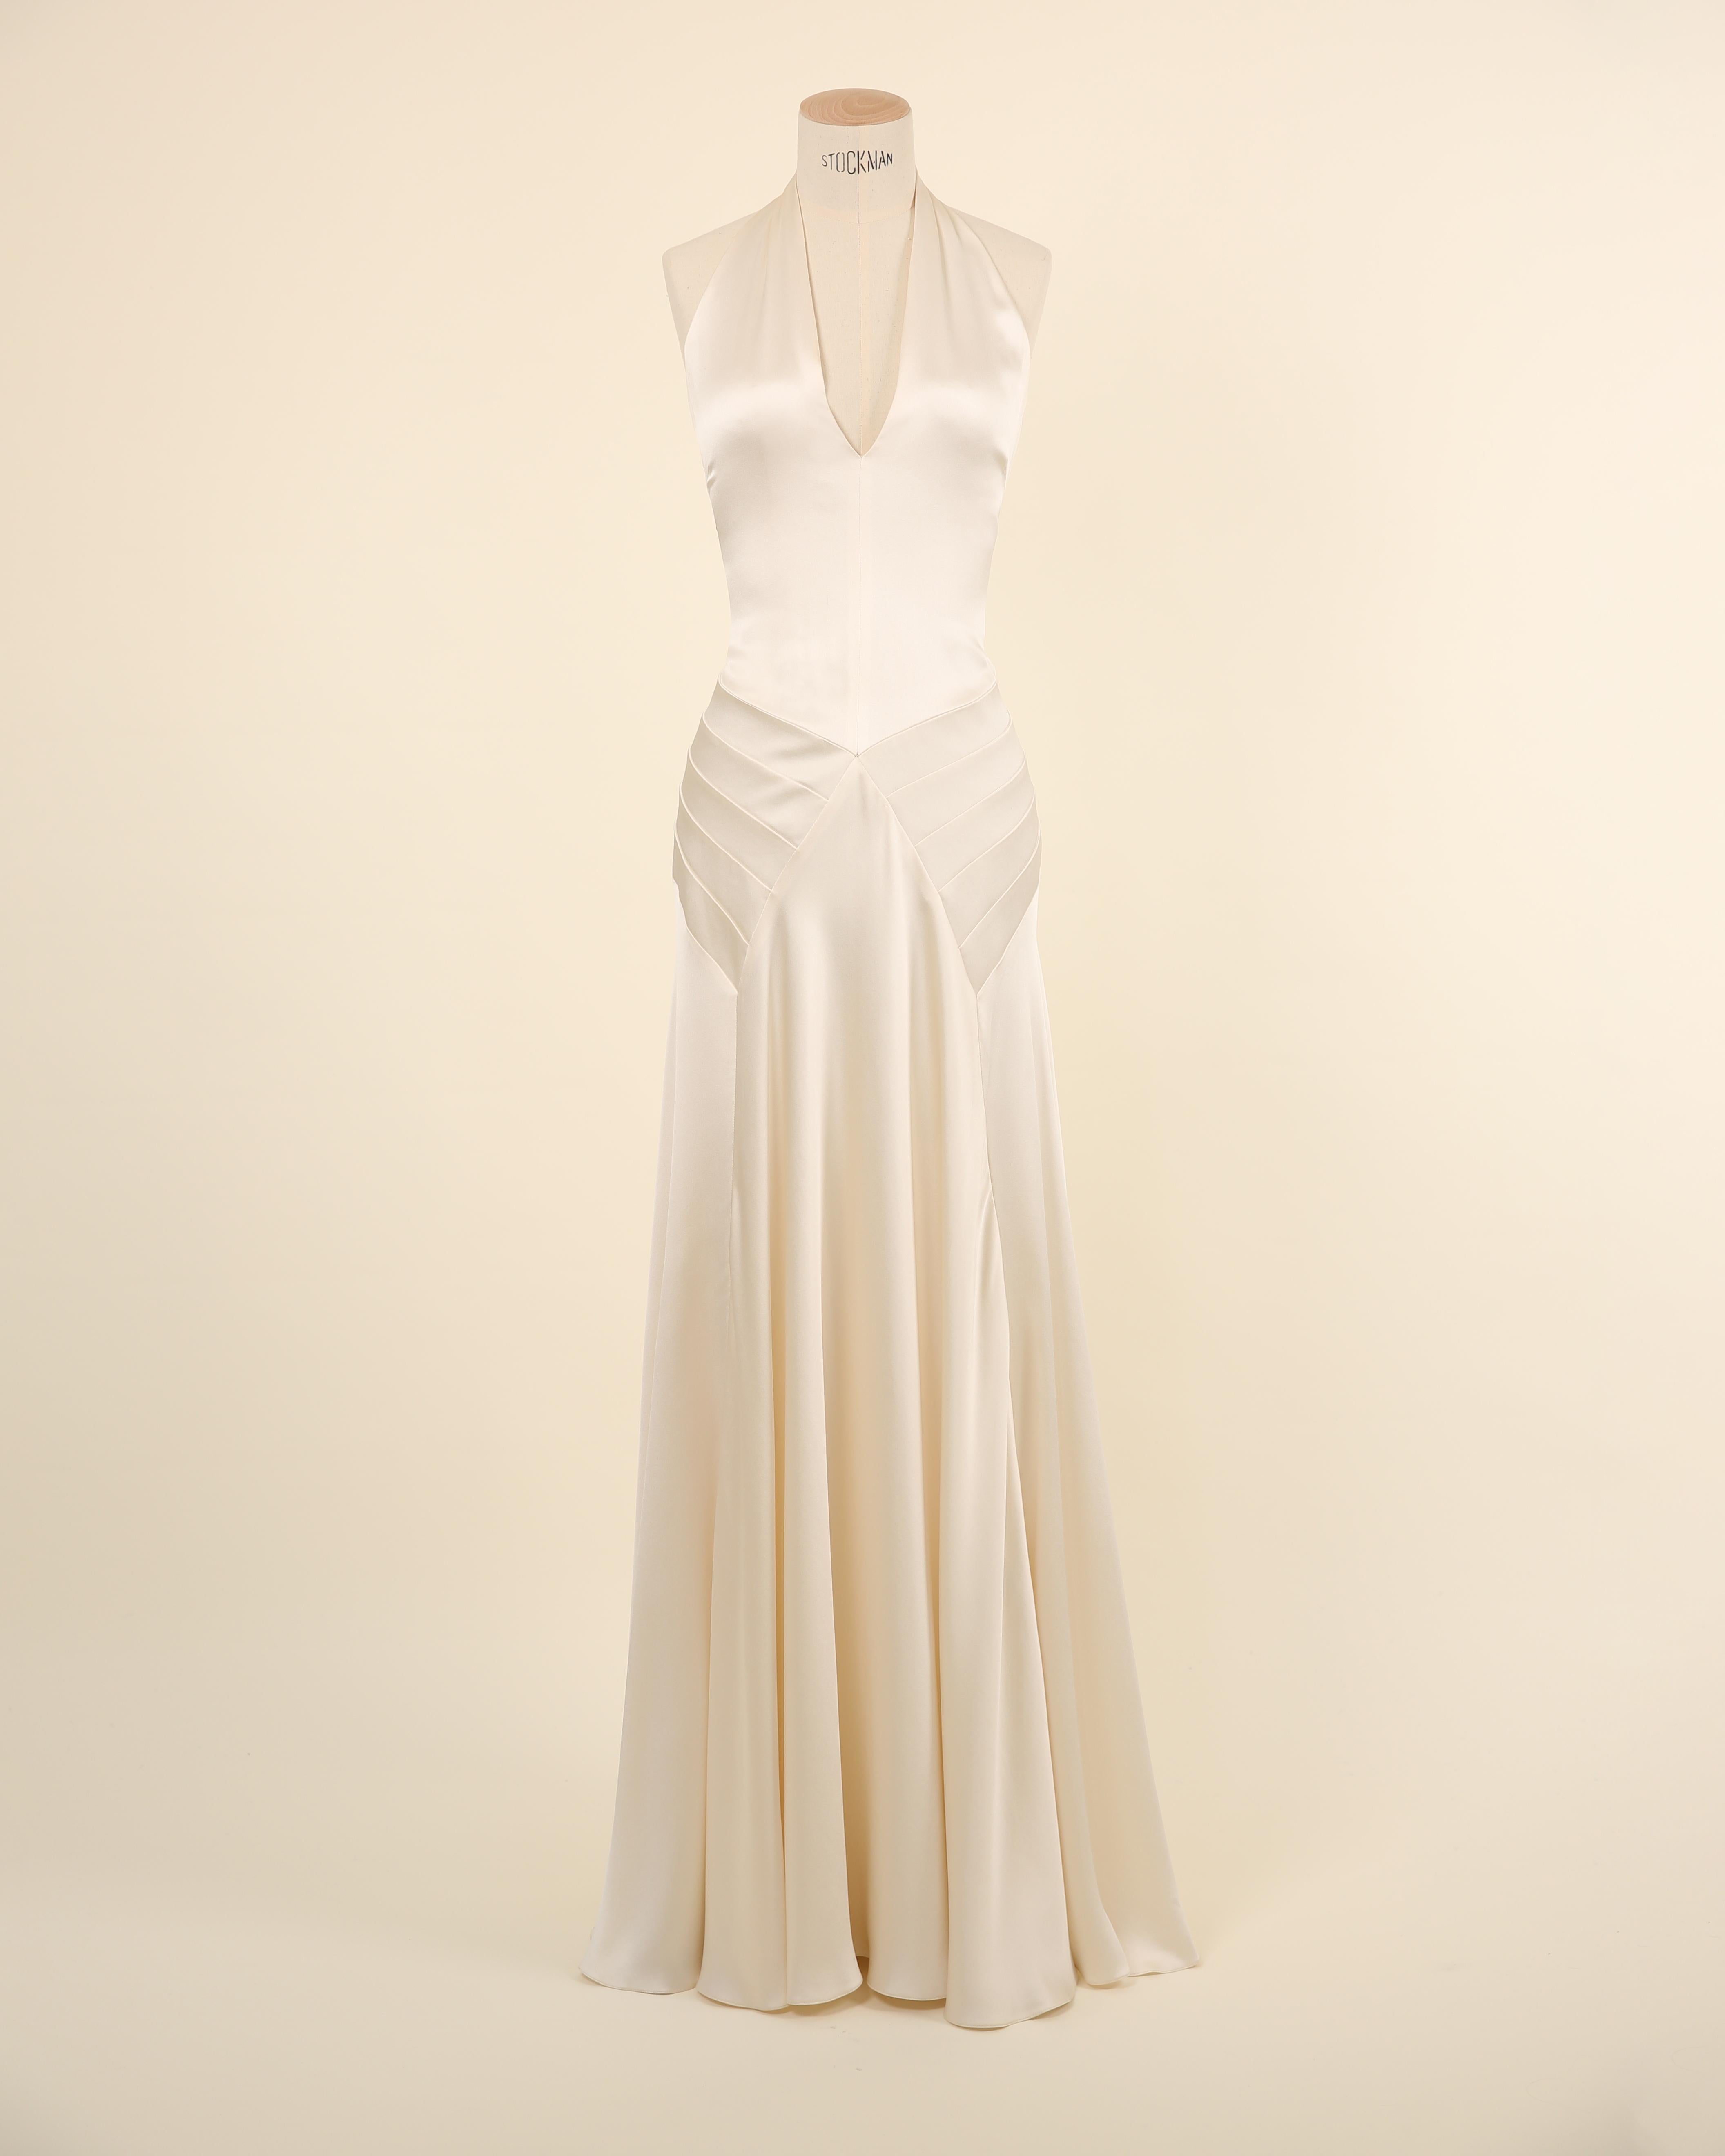 Women's Ralph Lauren S/S 2009 white ivory silk plunging halter neck wedding gown dress For Sale